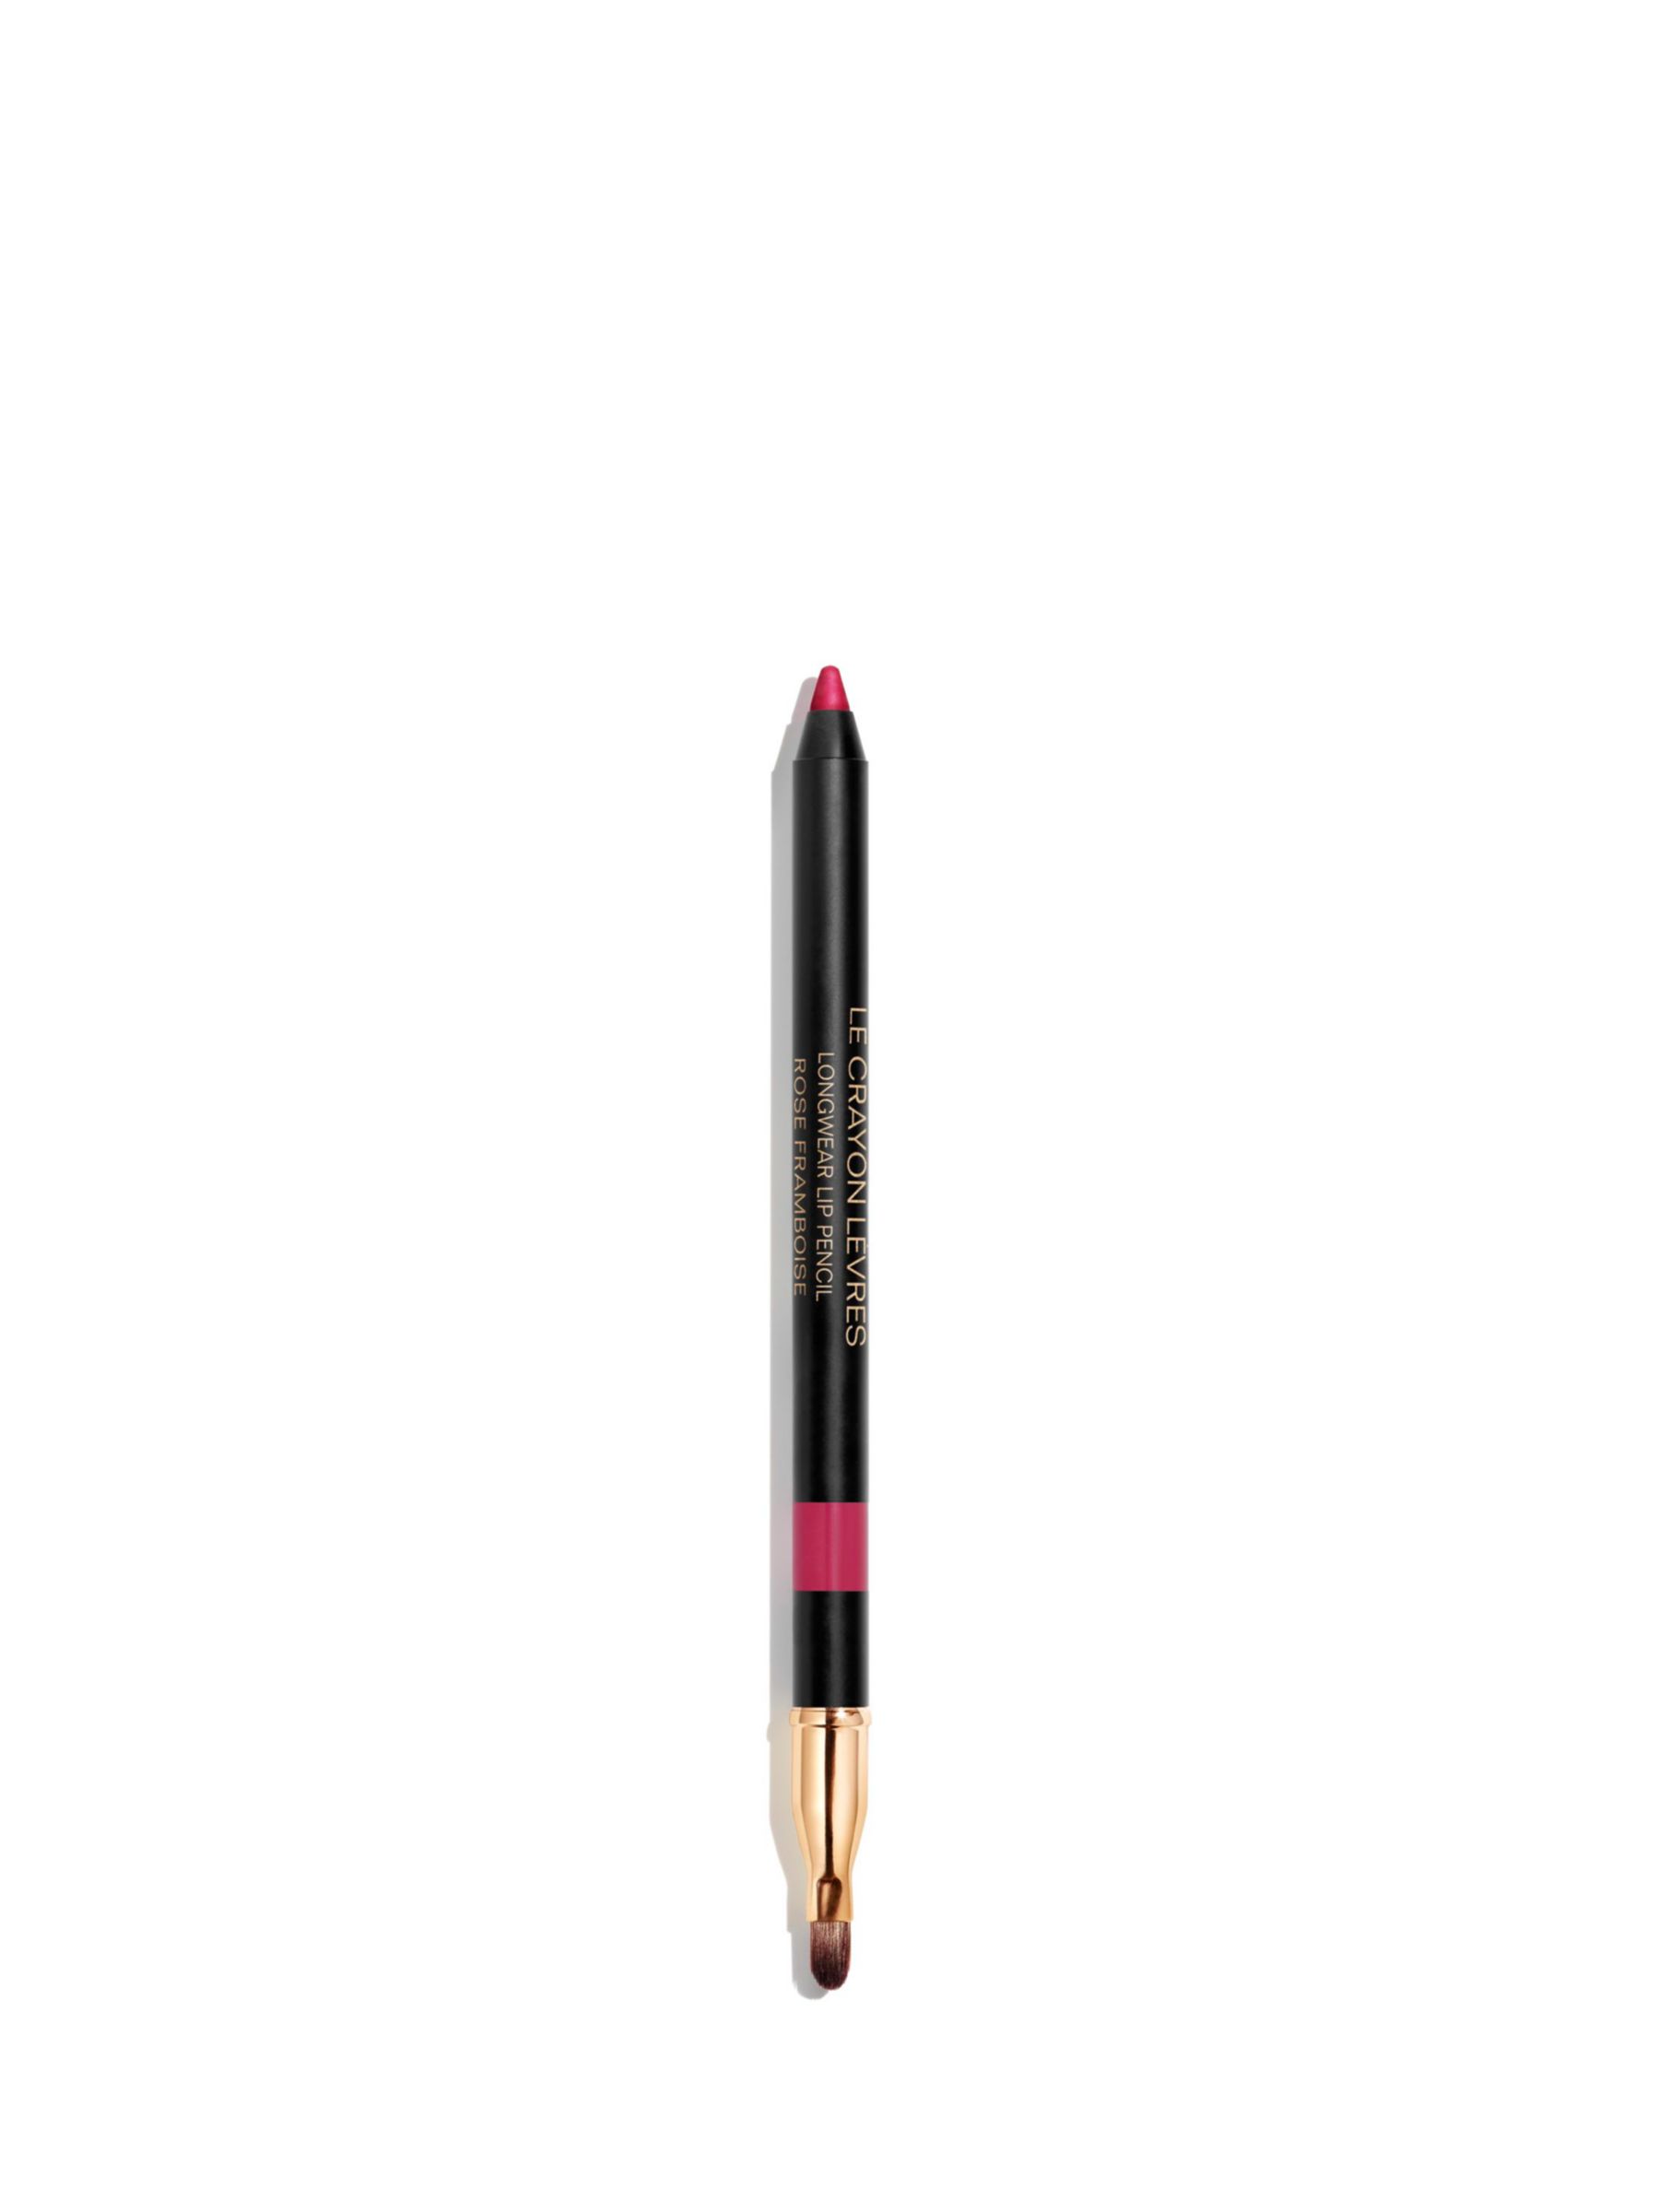 CHANEL Le Crayon Lèvres Longwear Lip Pencil, 182 Rose Framboise at